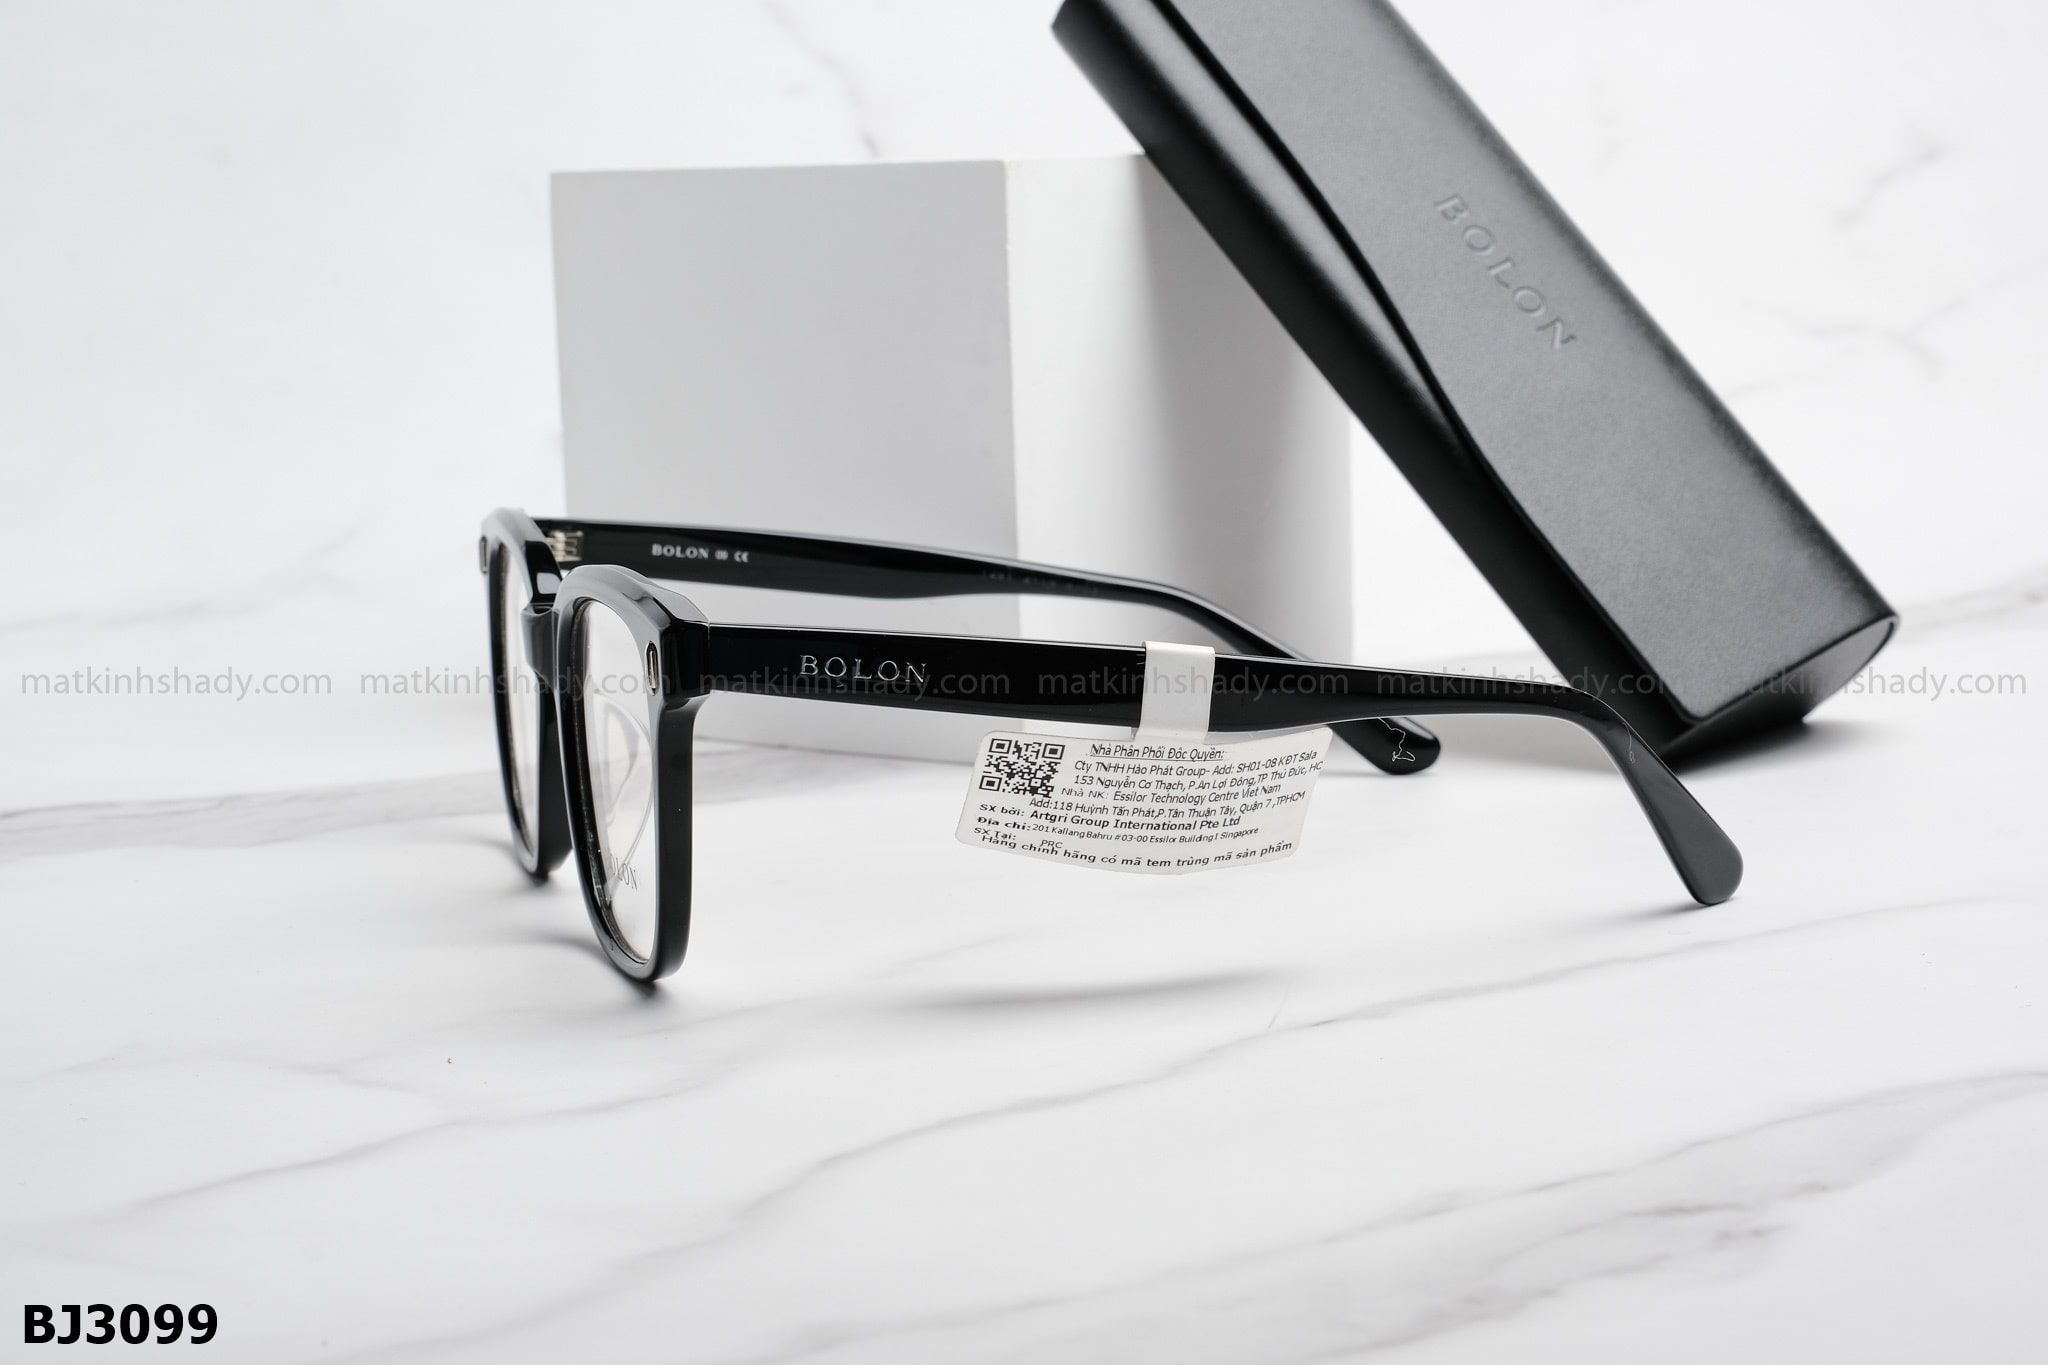  Bolon Eyewear - Glasses - BJ3099 